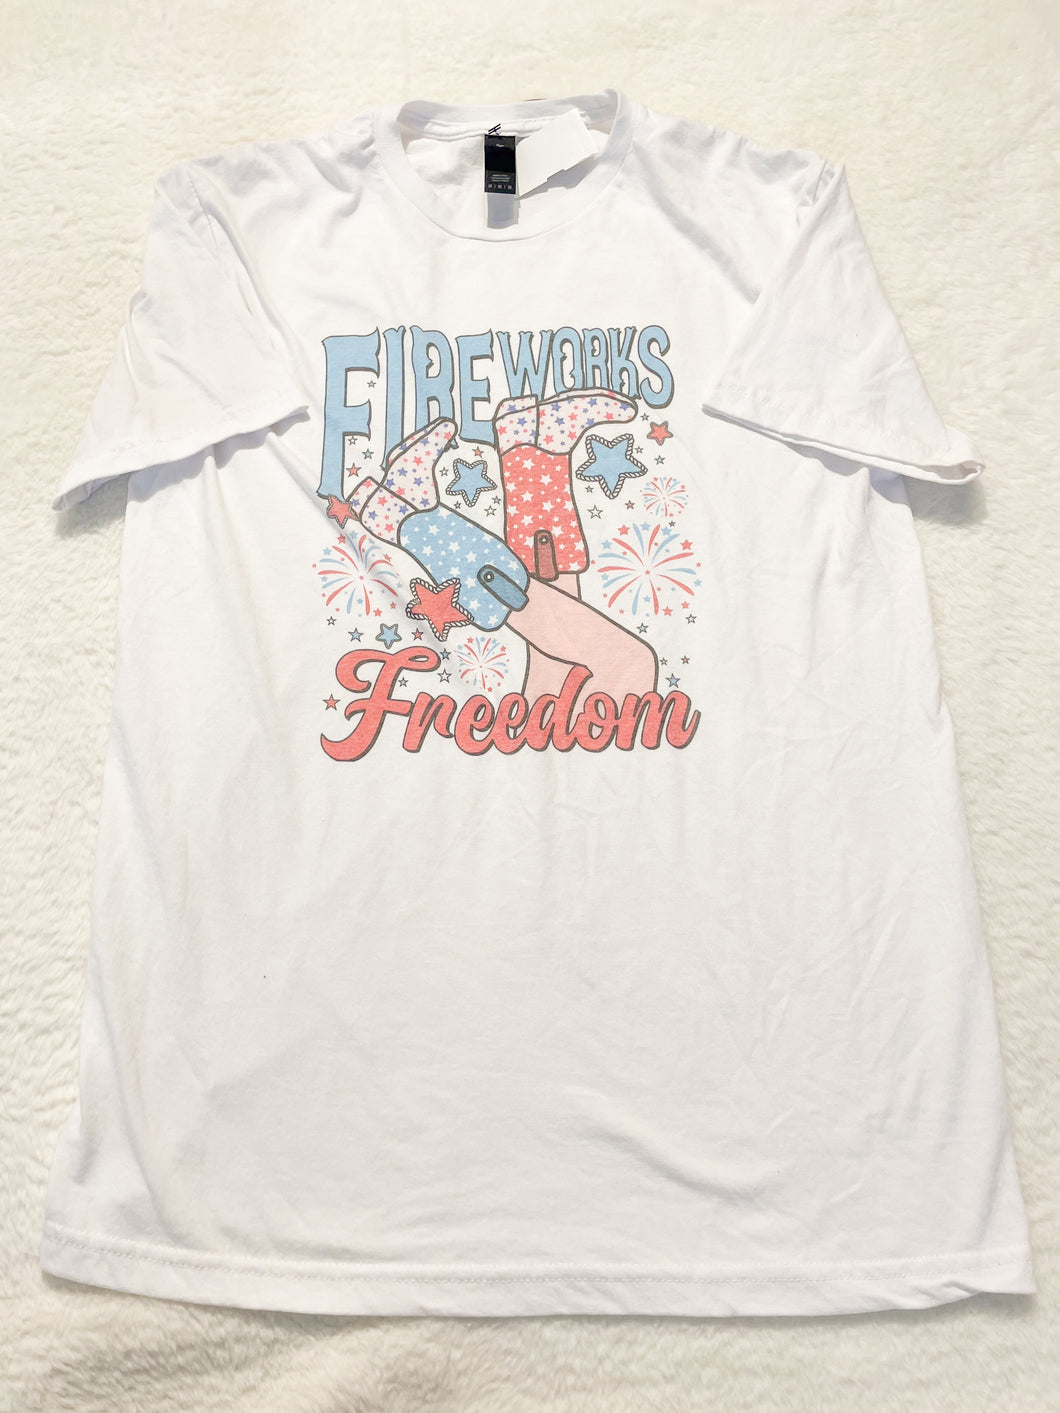 Fireworks & Freedom T-Shirt Size Medium *